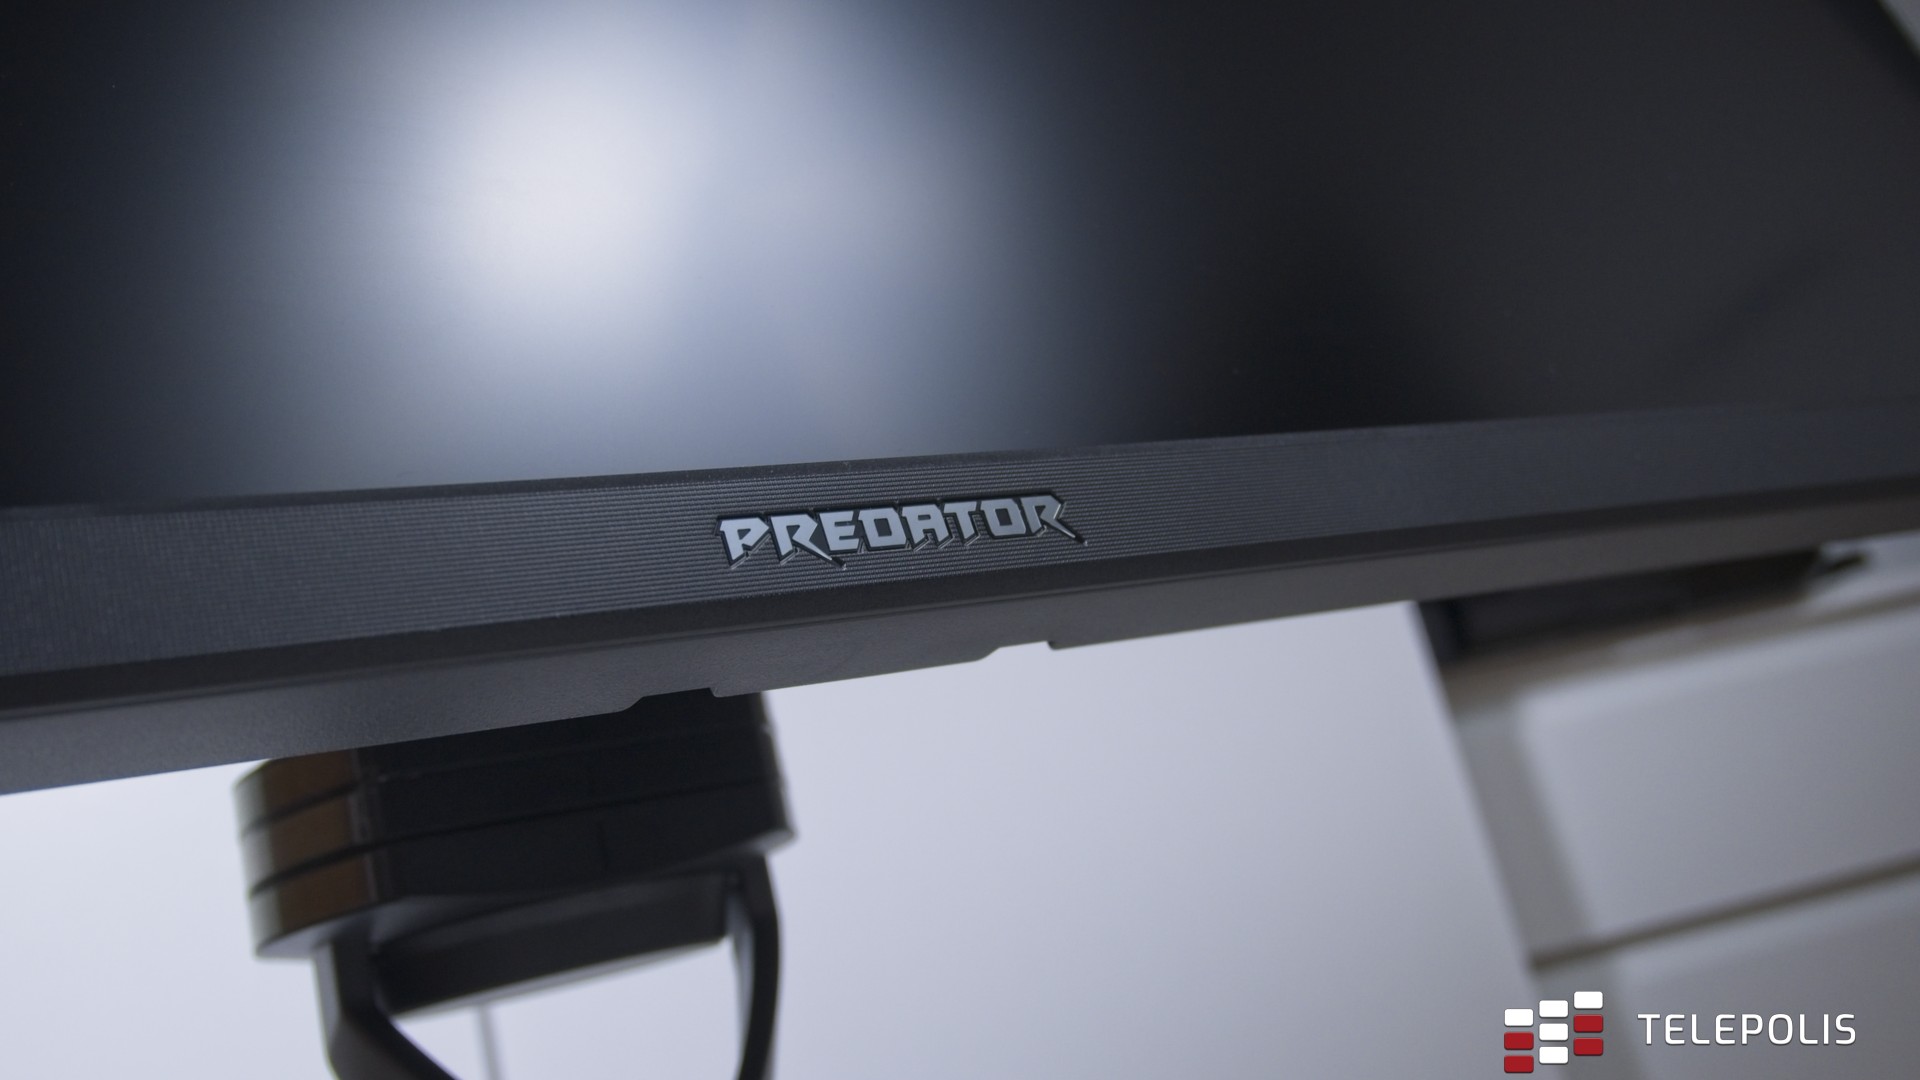 Acer Predator XB323U